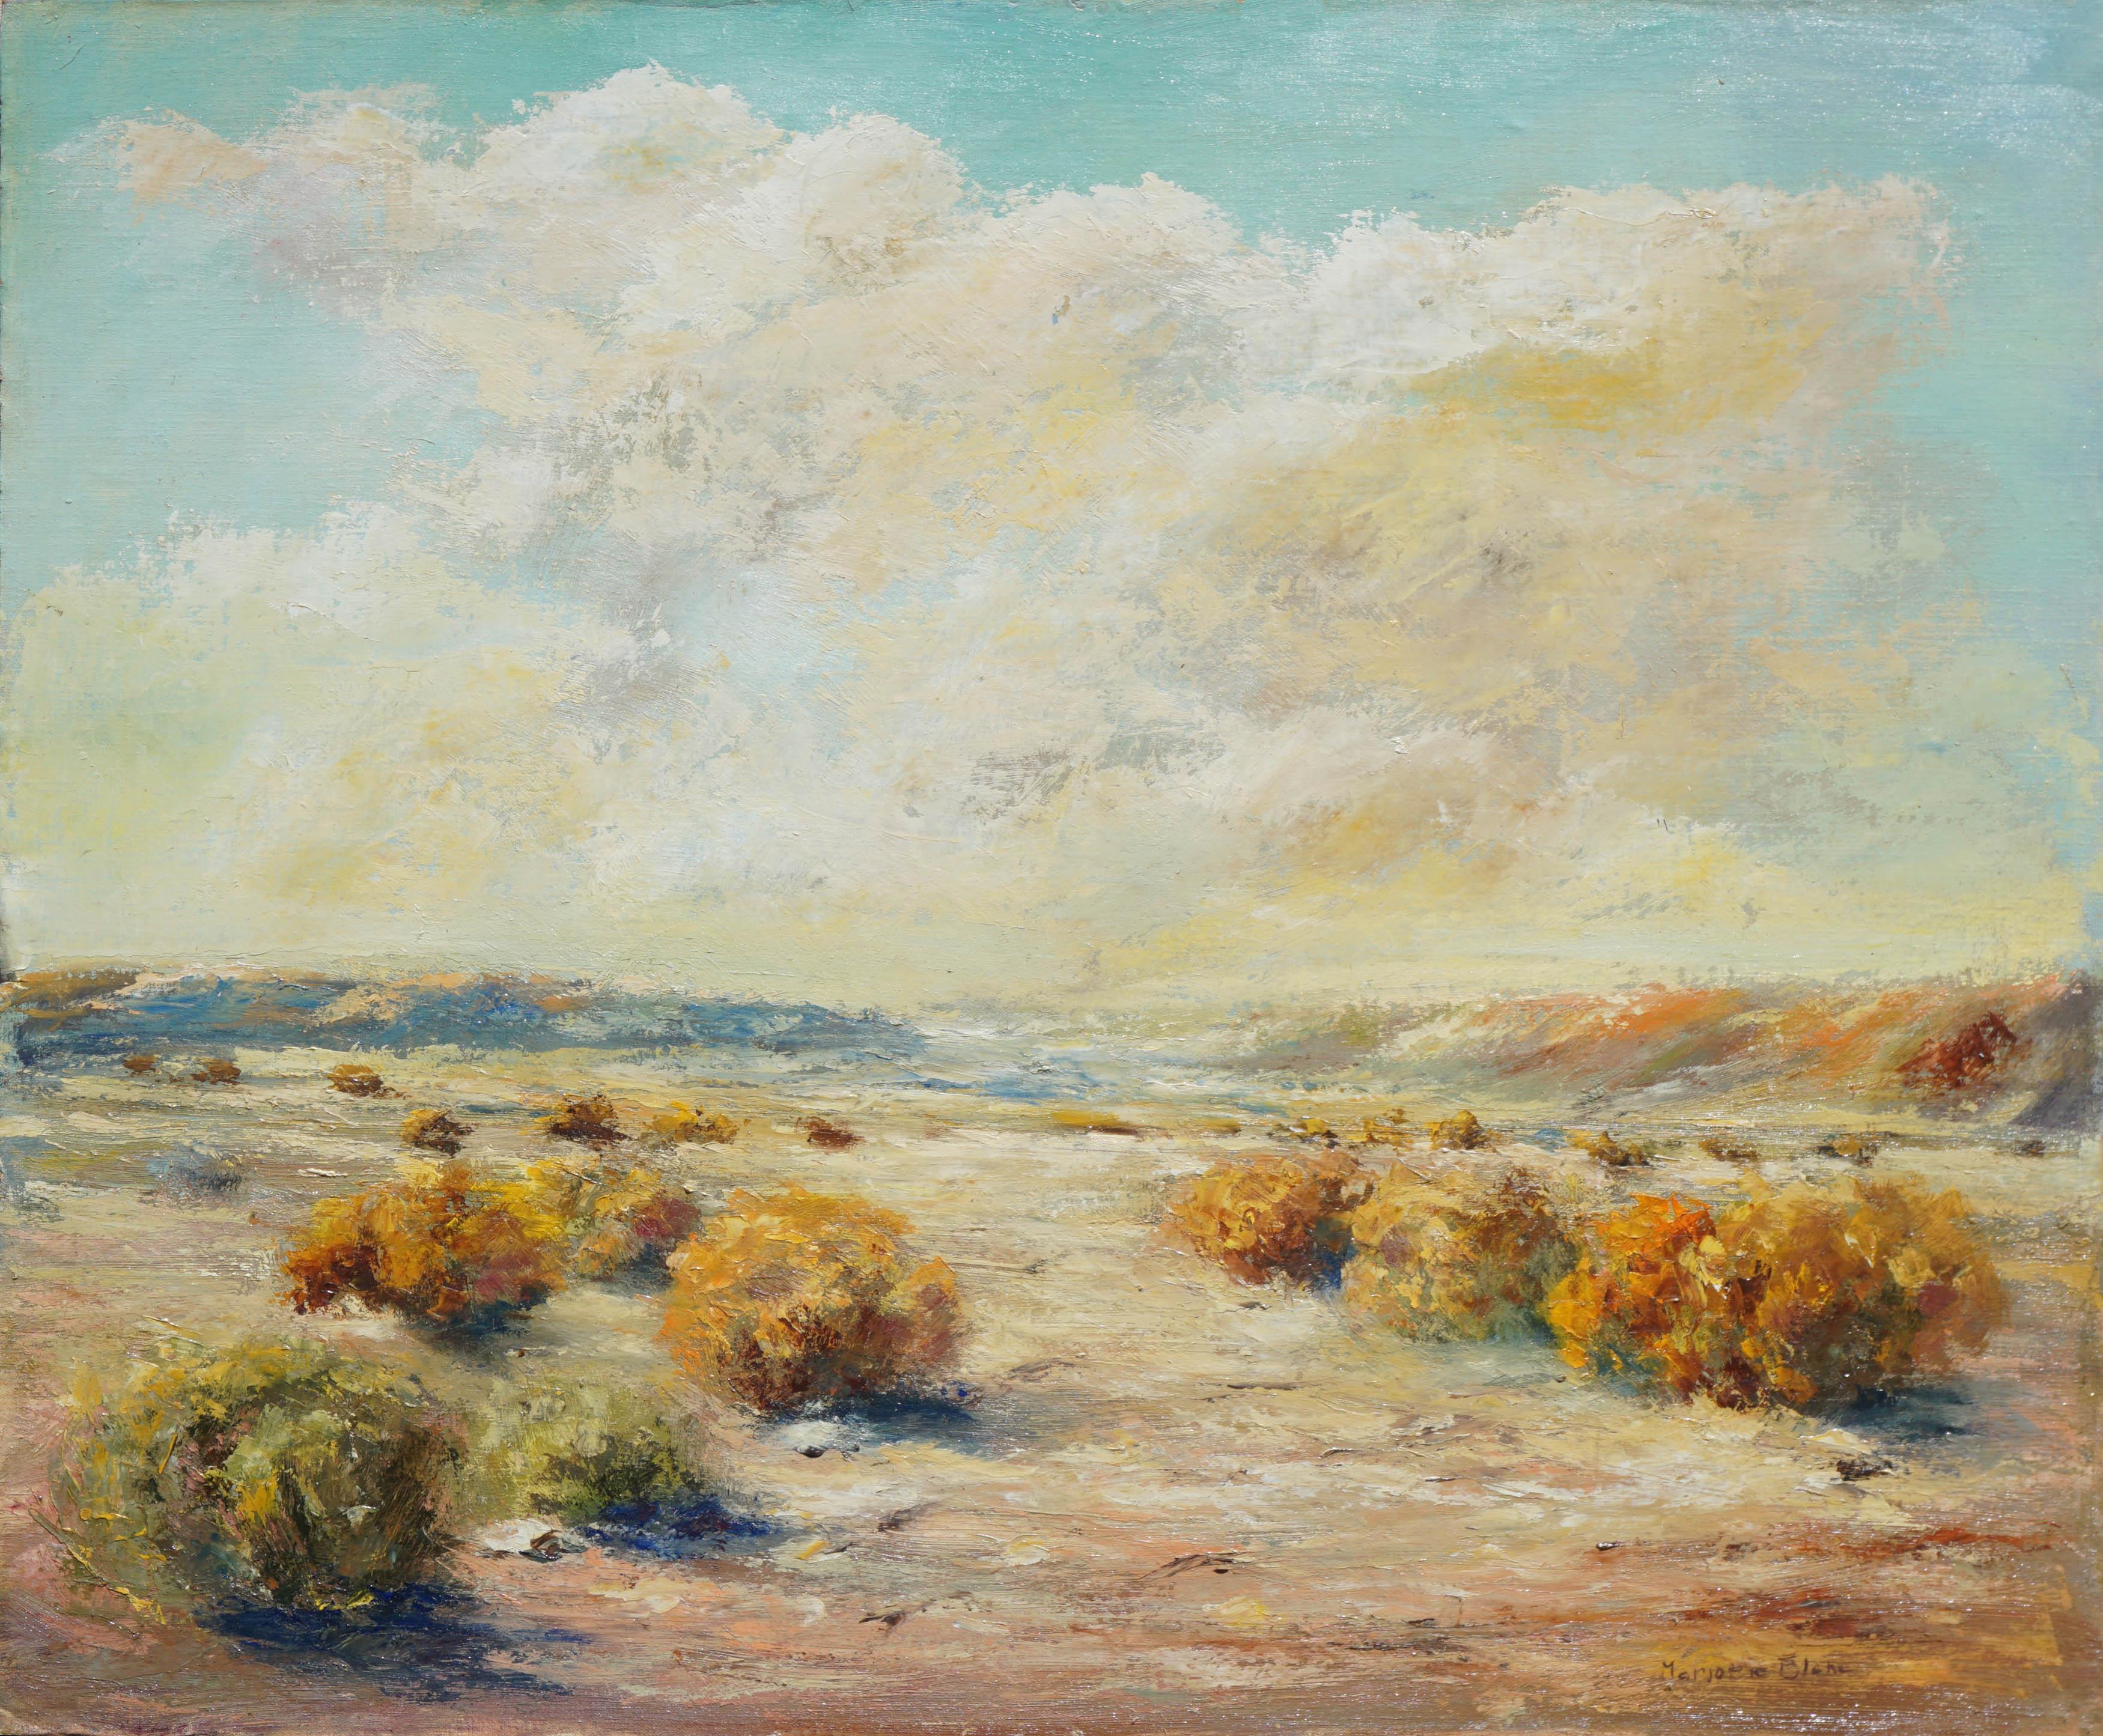 Marjorie May Blake Landscape Painting - Mid Century 1960s Palm Springs California Desert Landscape